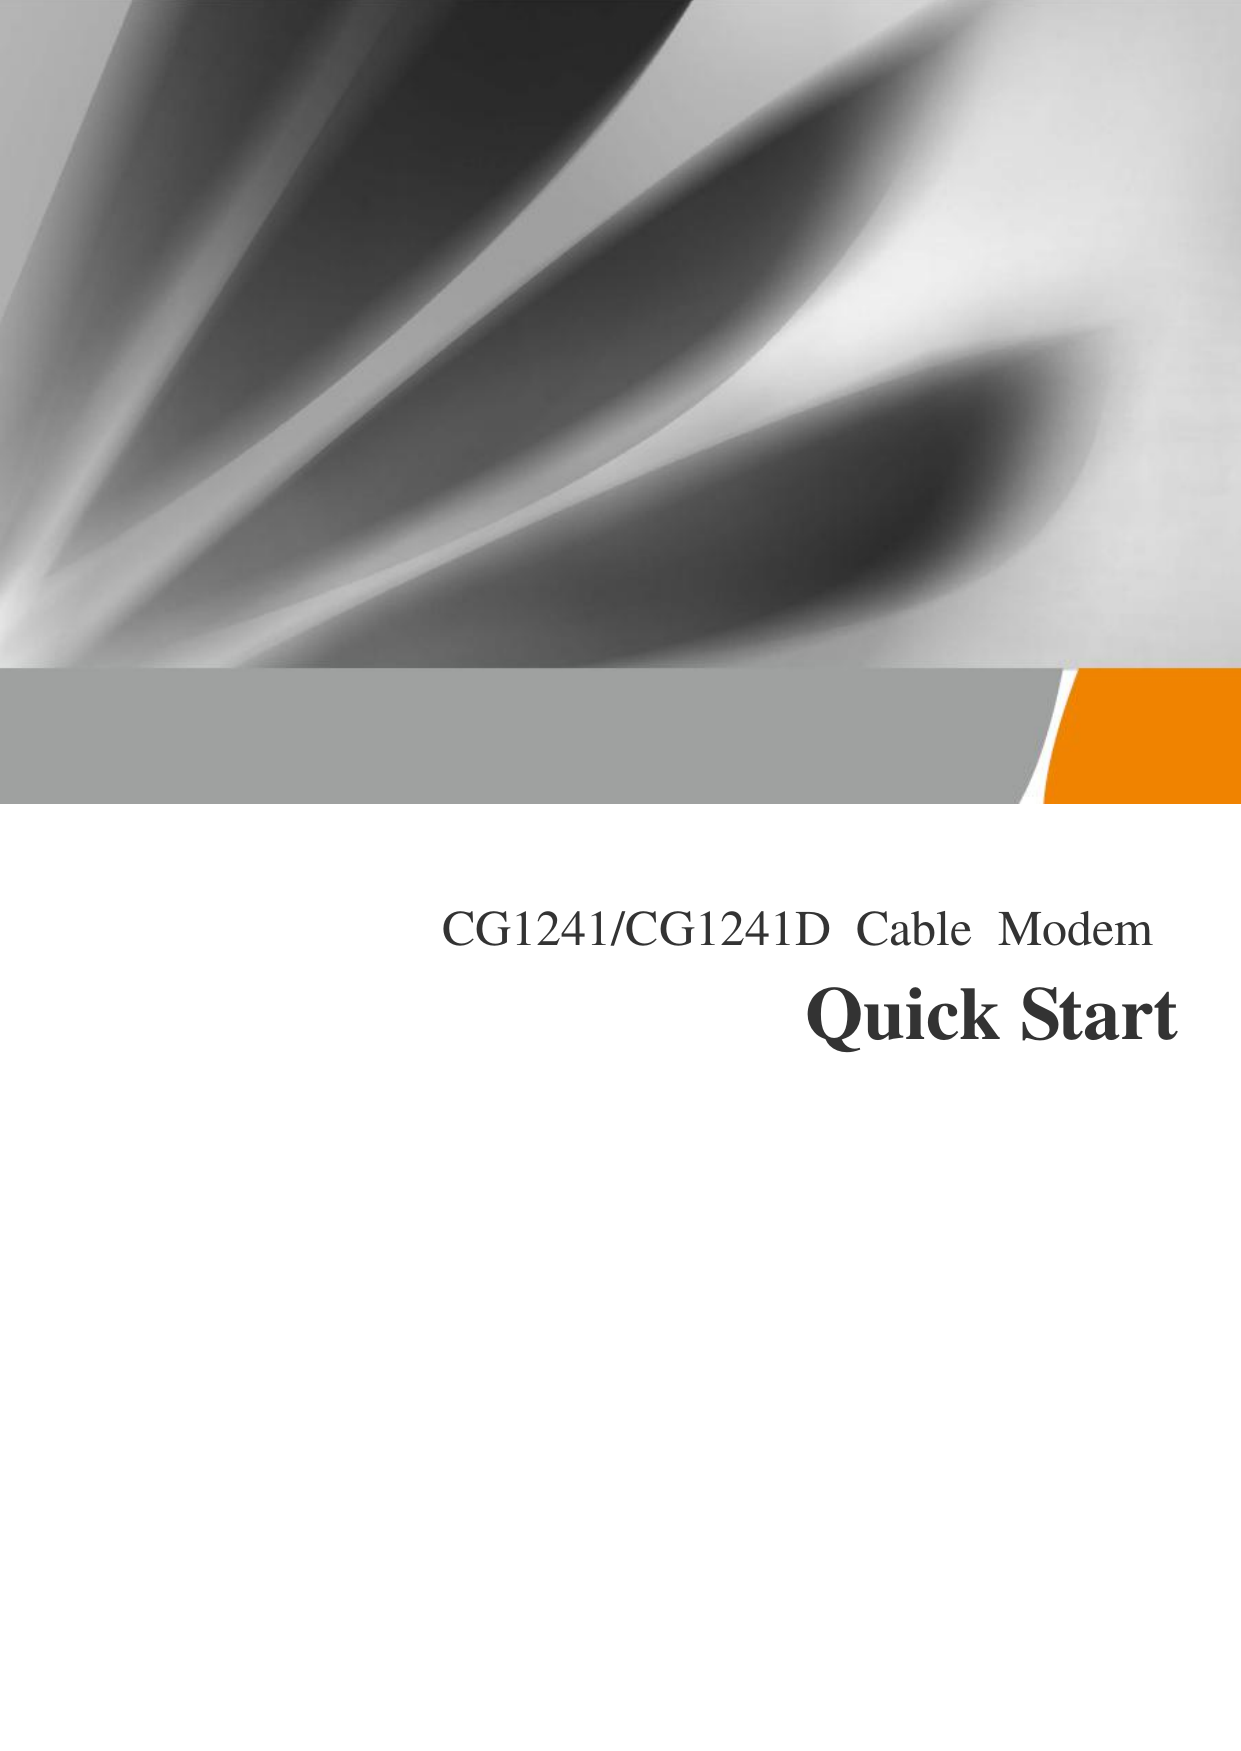   CG1241/CG1241D Cable  Modem   Quick Start 